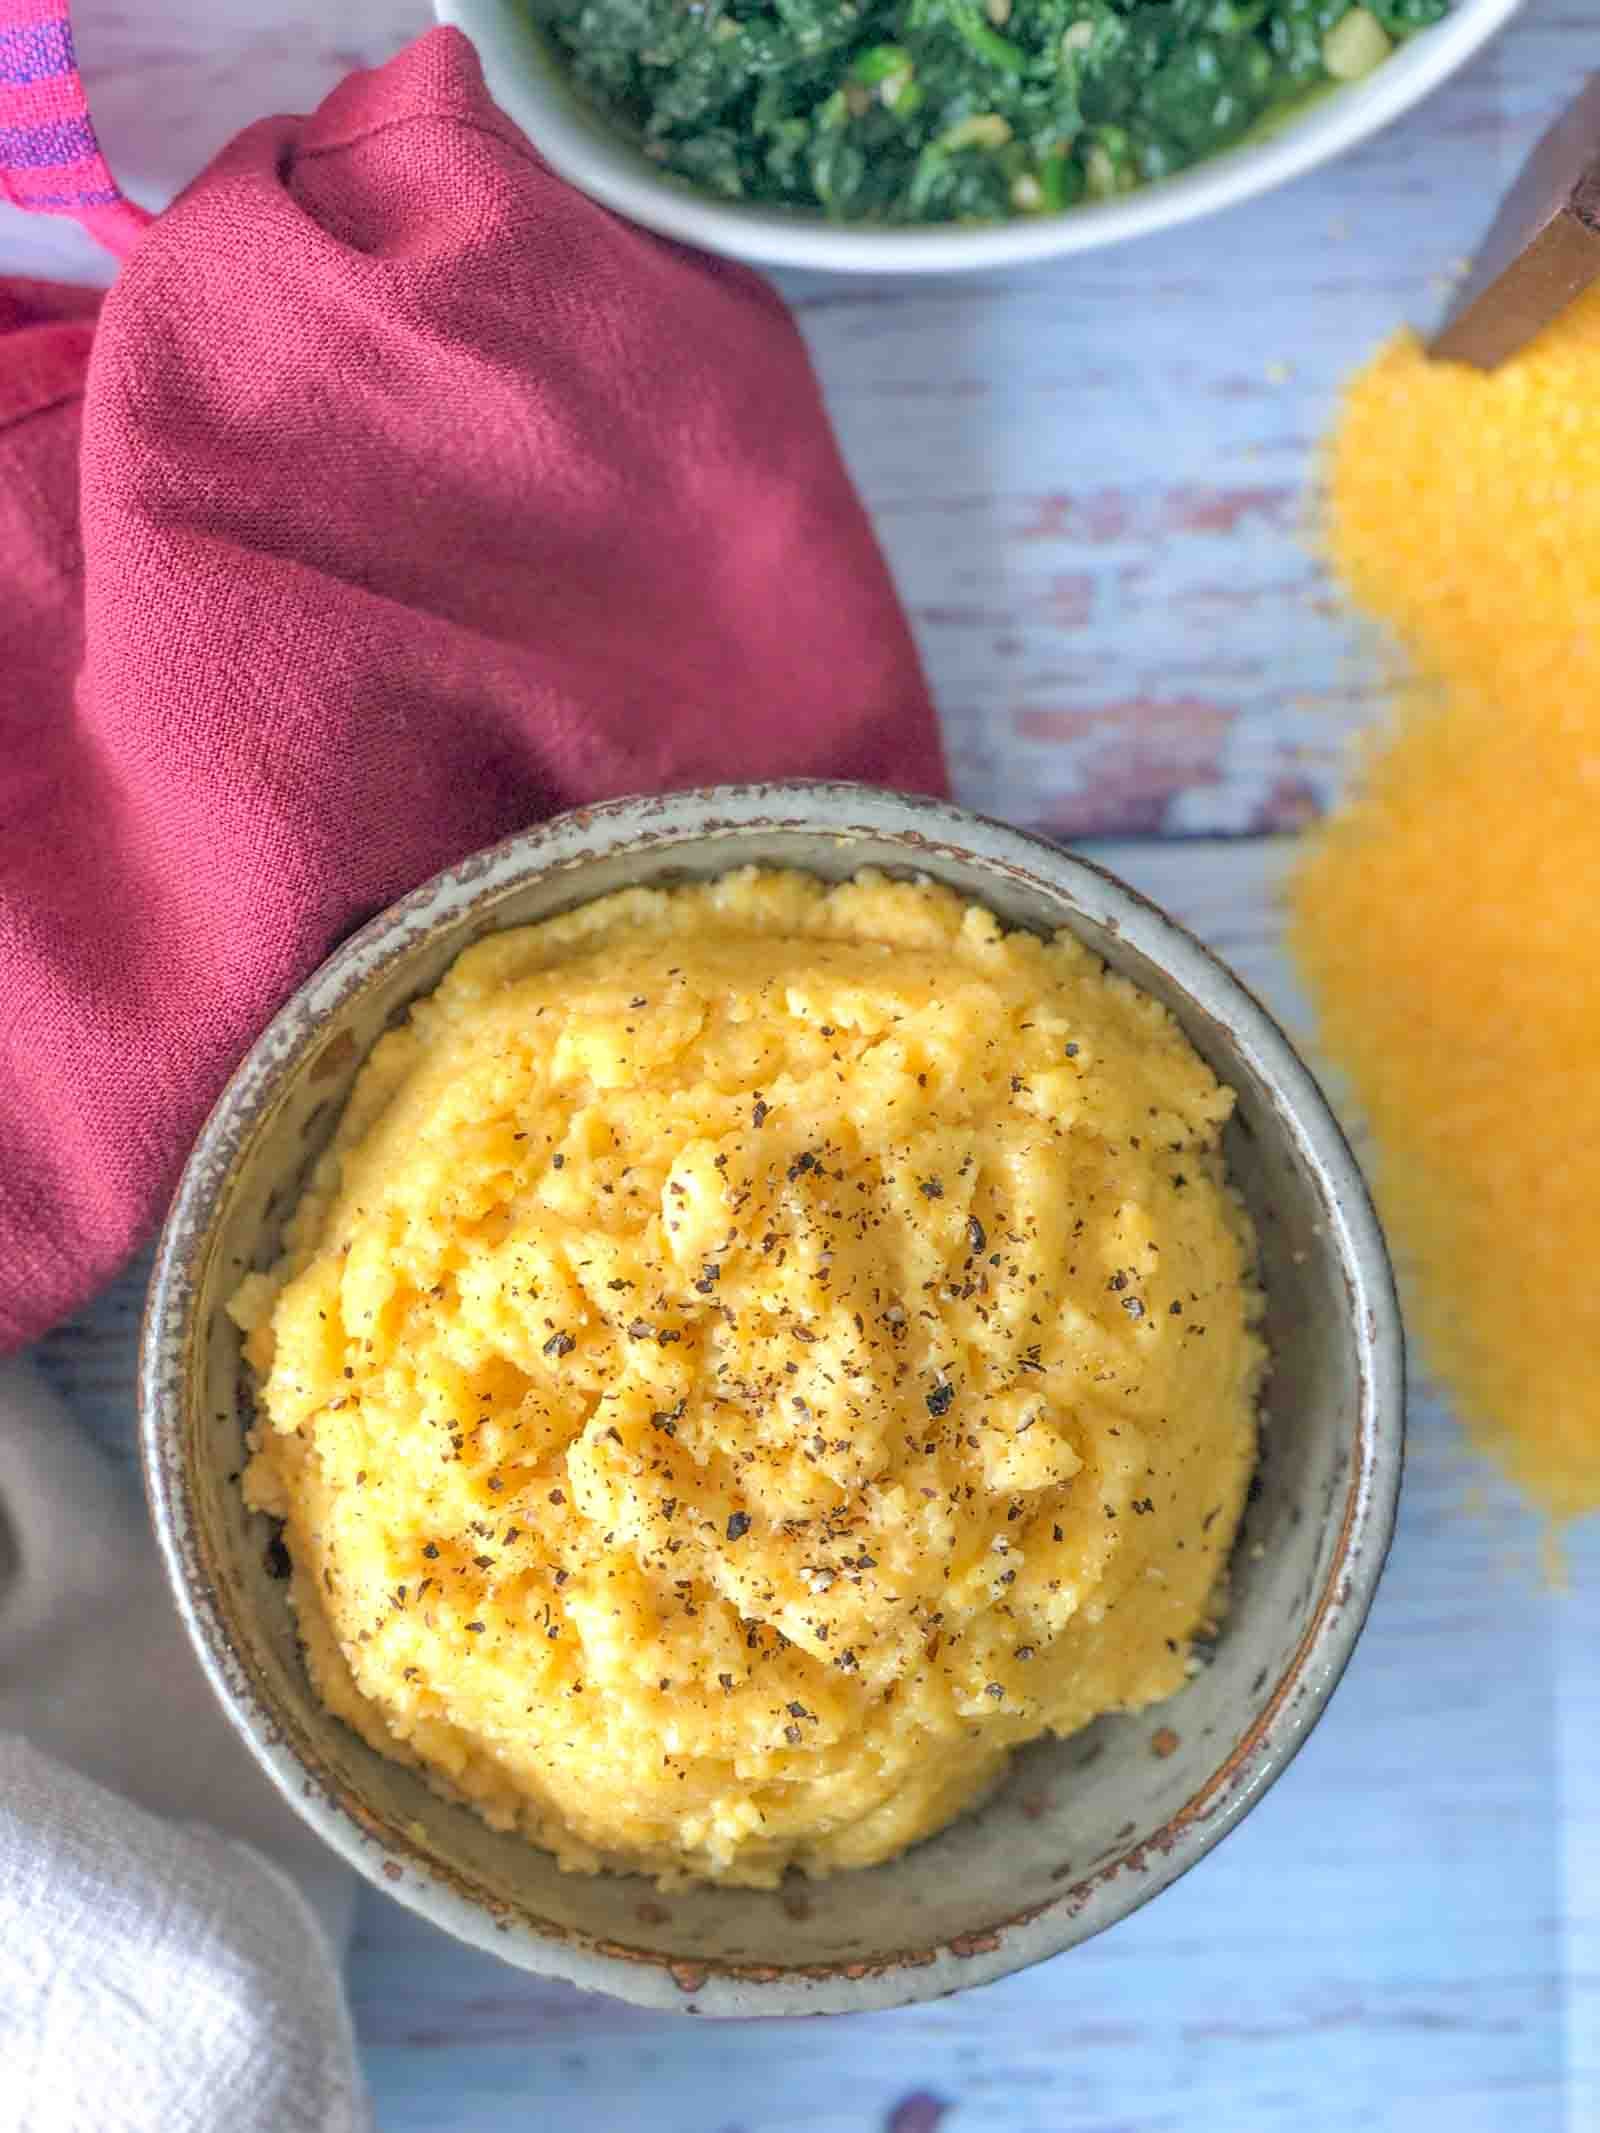 Creamy Polenta Recipe - Savory Cornmeal Porridge by Archana's Kitchen